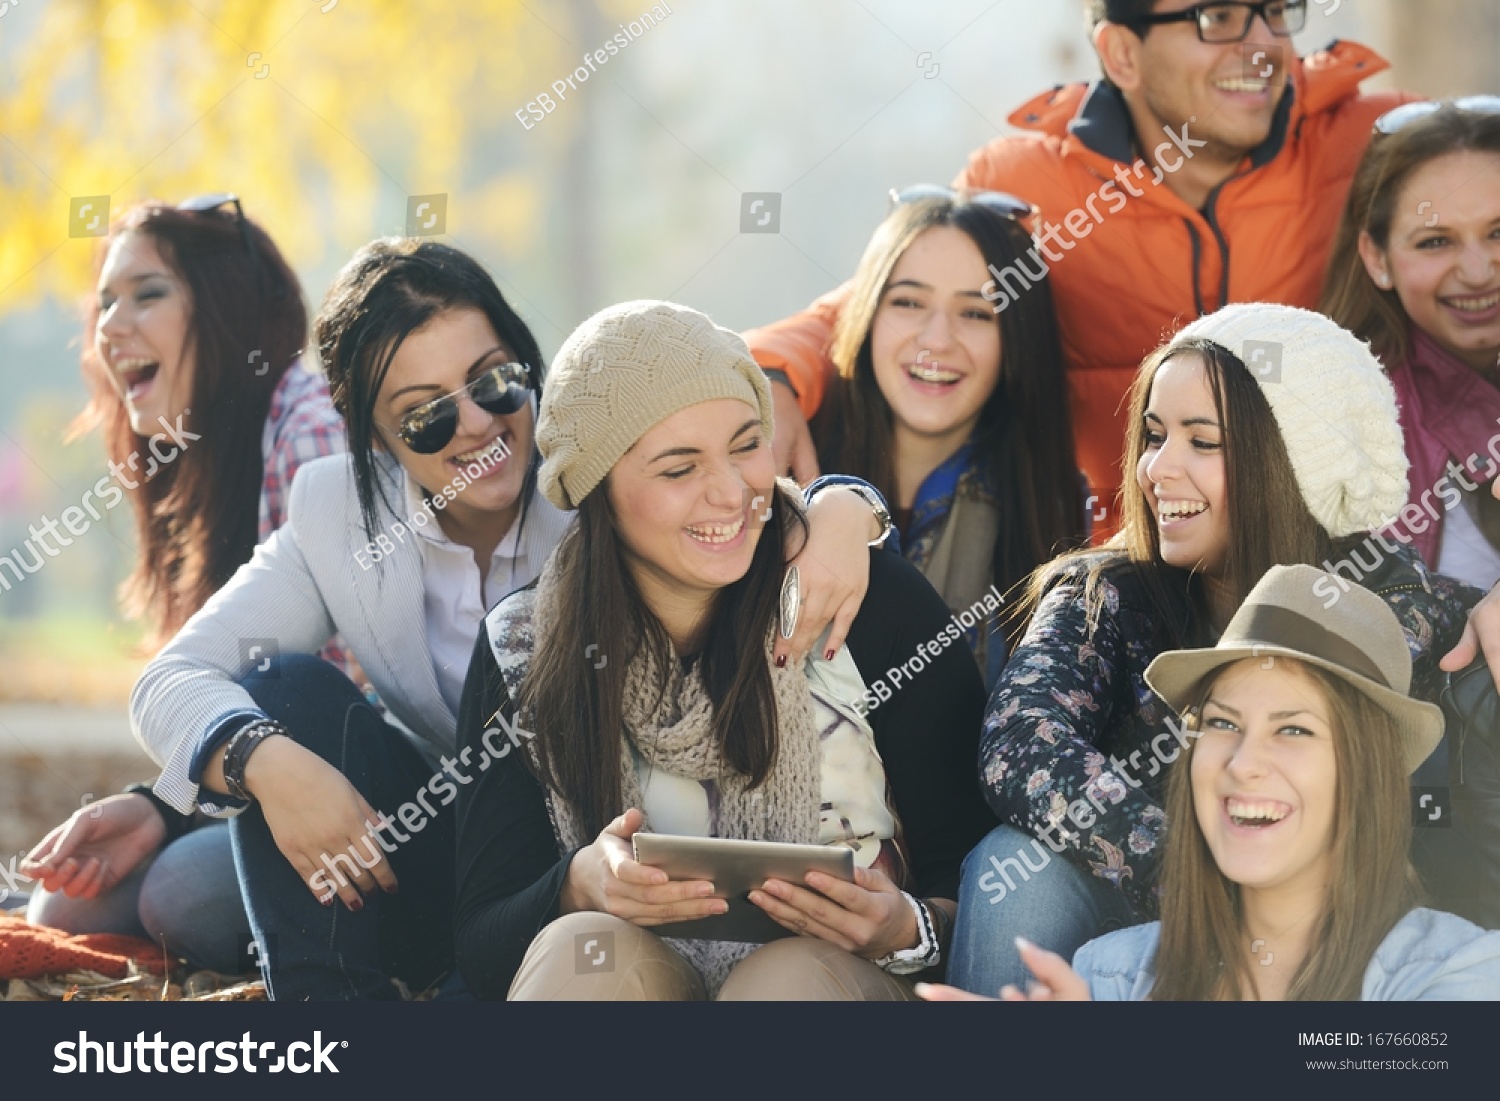 Happy teen girls having good fun time outdoors #167660852